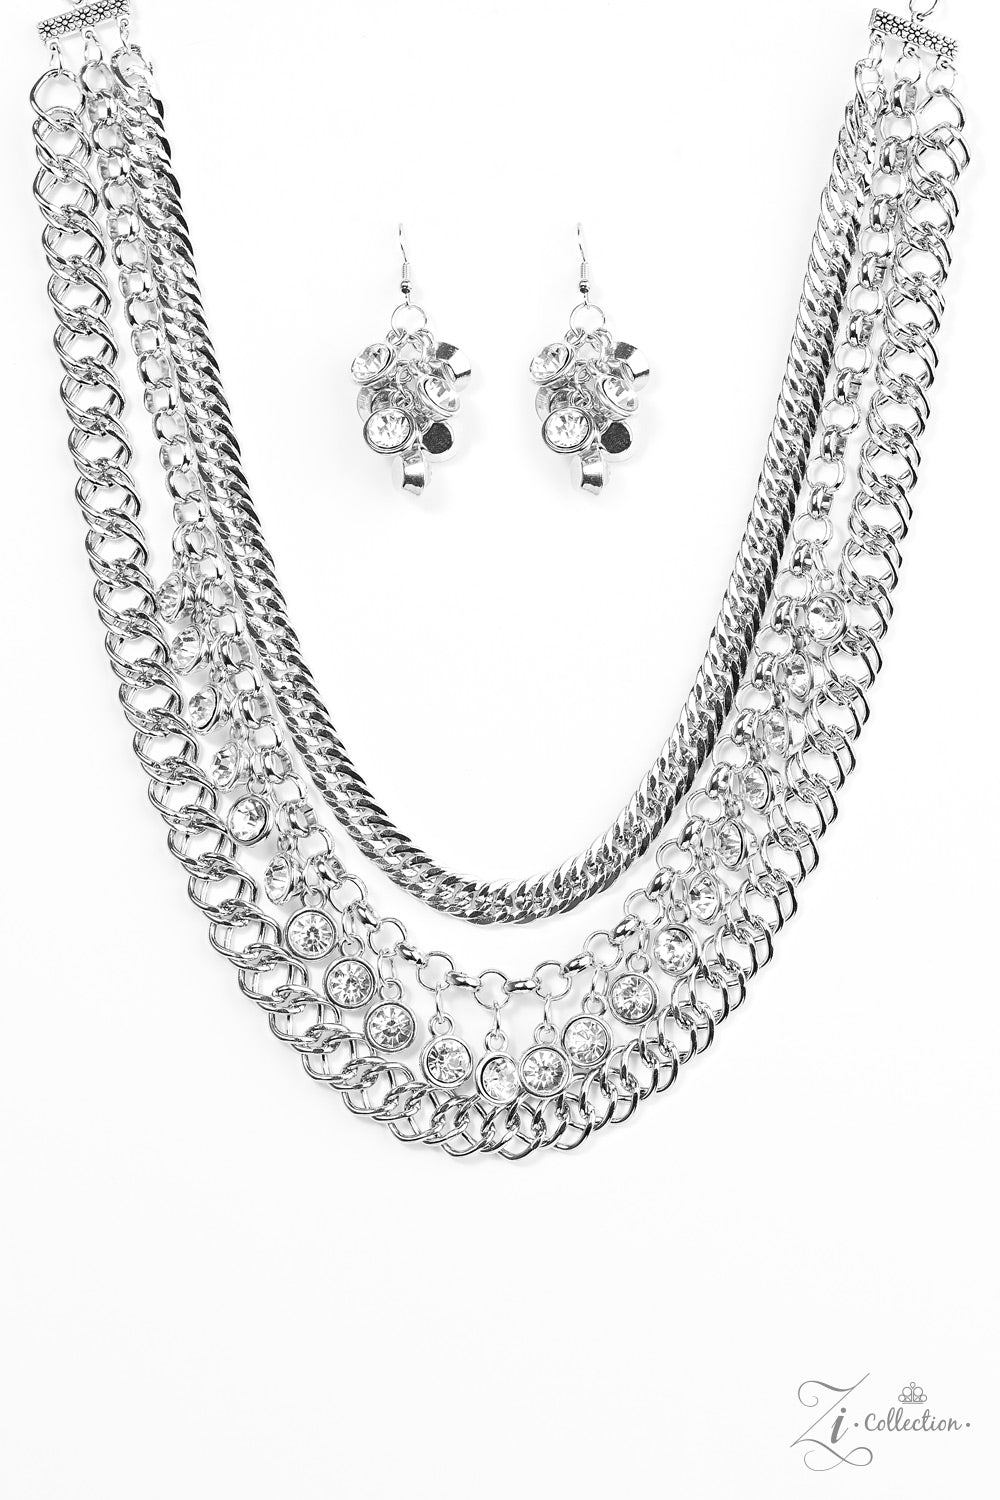 Powerhouse Zi Collection Silver Paparazzi Necklace Cashmere Pink Jewels - Cashmere Pink Jewels & Accessories, Cashmere Pink Jewels & Accessories - Paparazzi